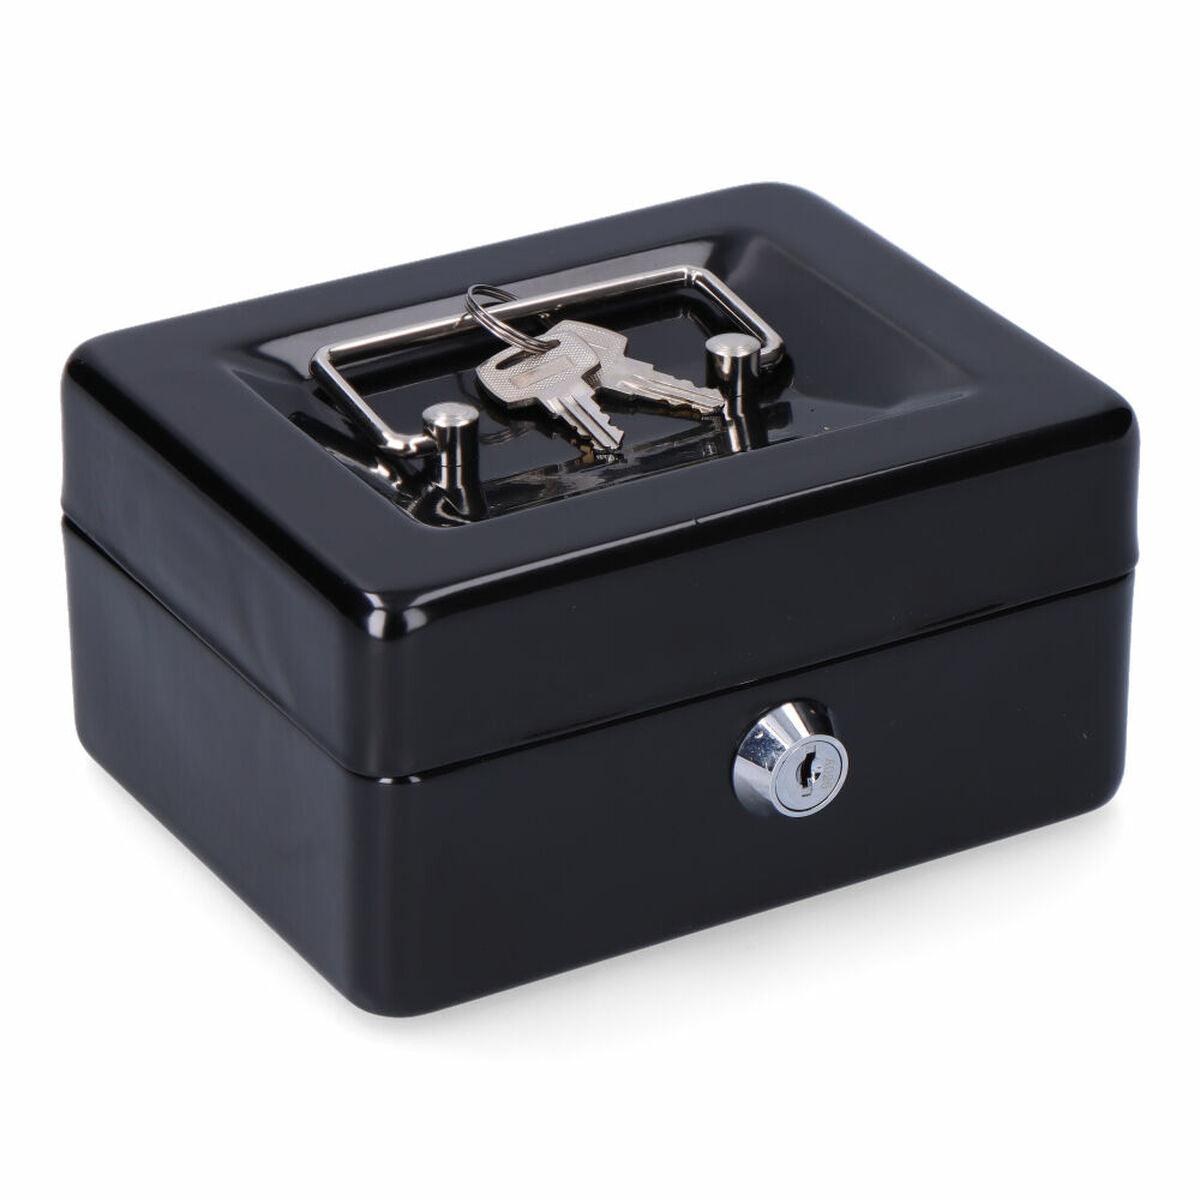 Safe-deposit box Micel CFC09 M13393 15,2 x 11,8 x 8 cm Black Steel - Sterilamo